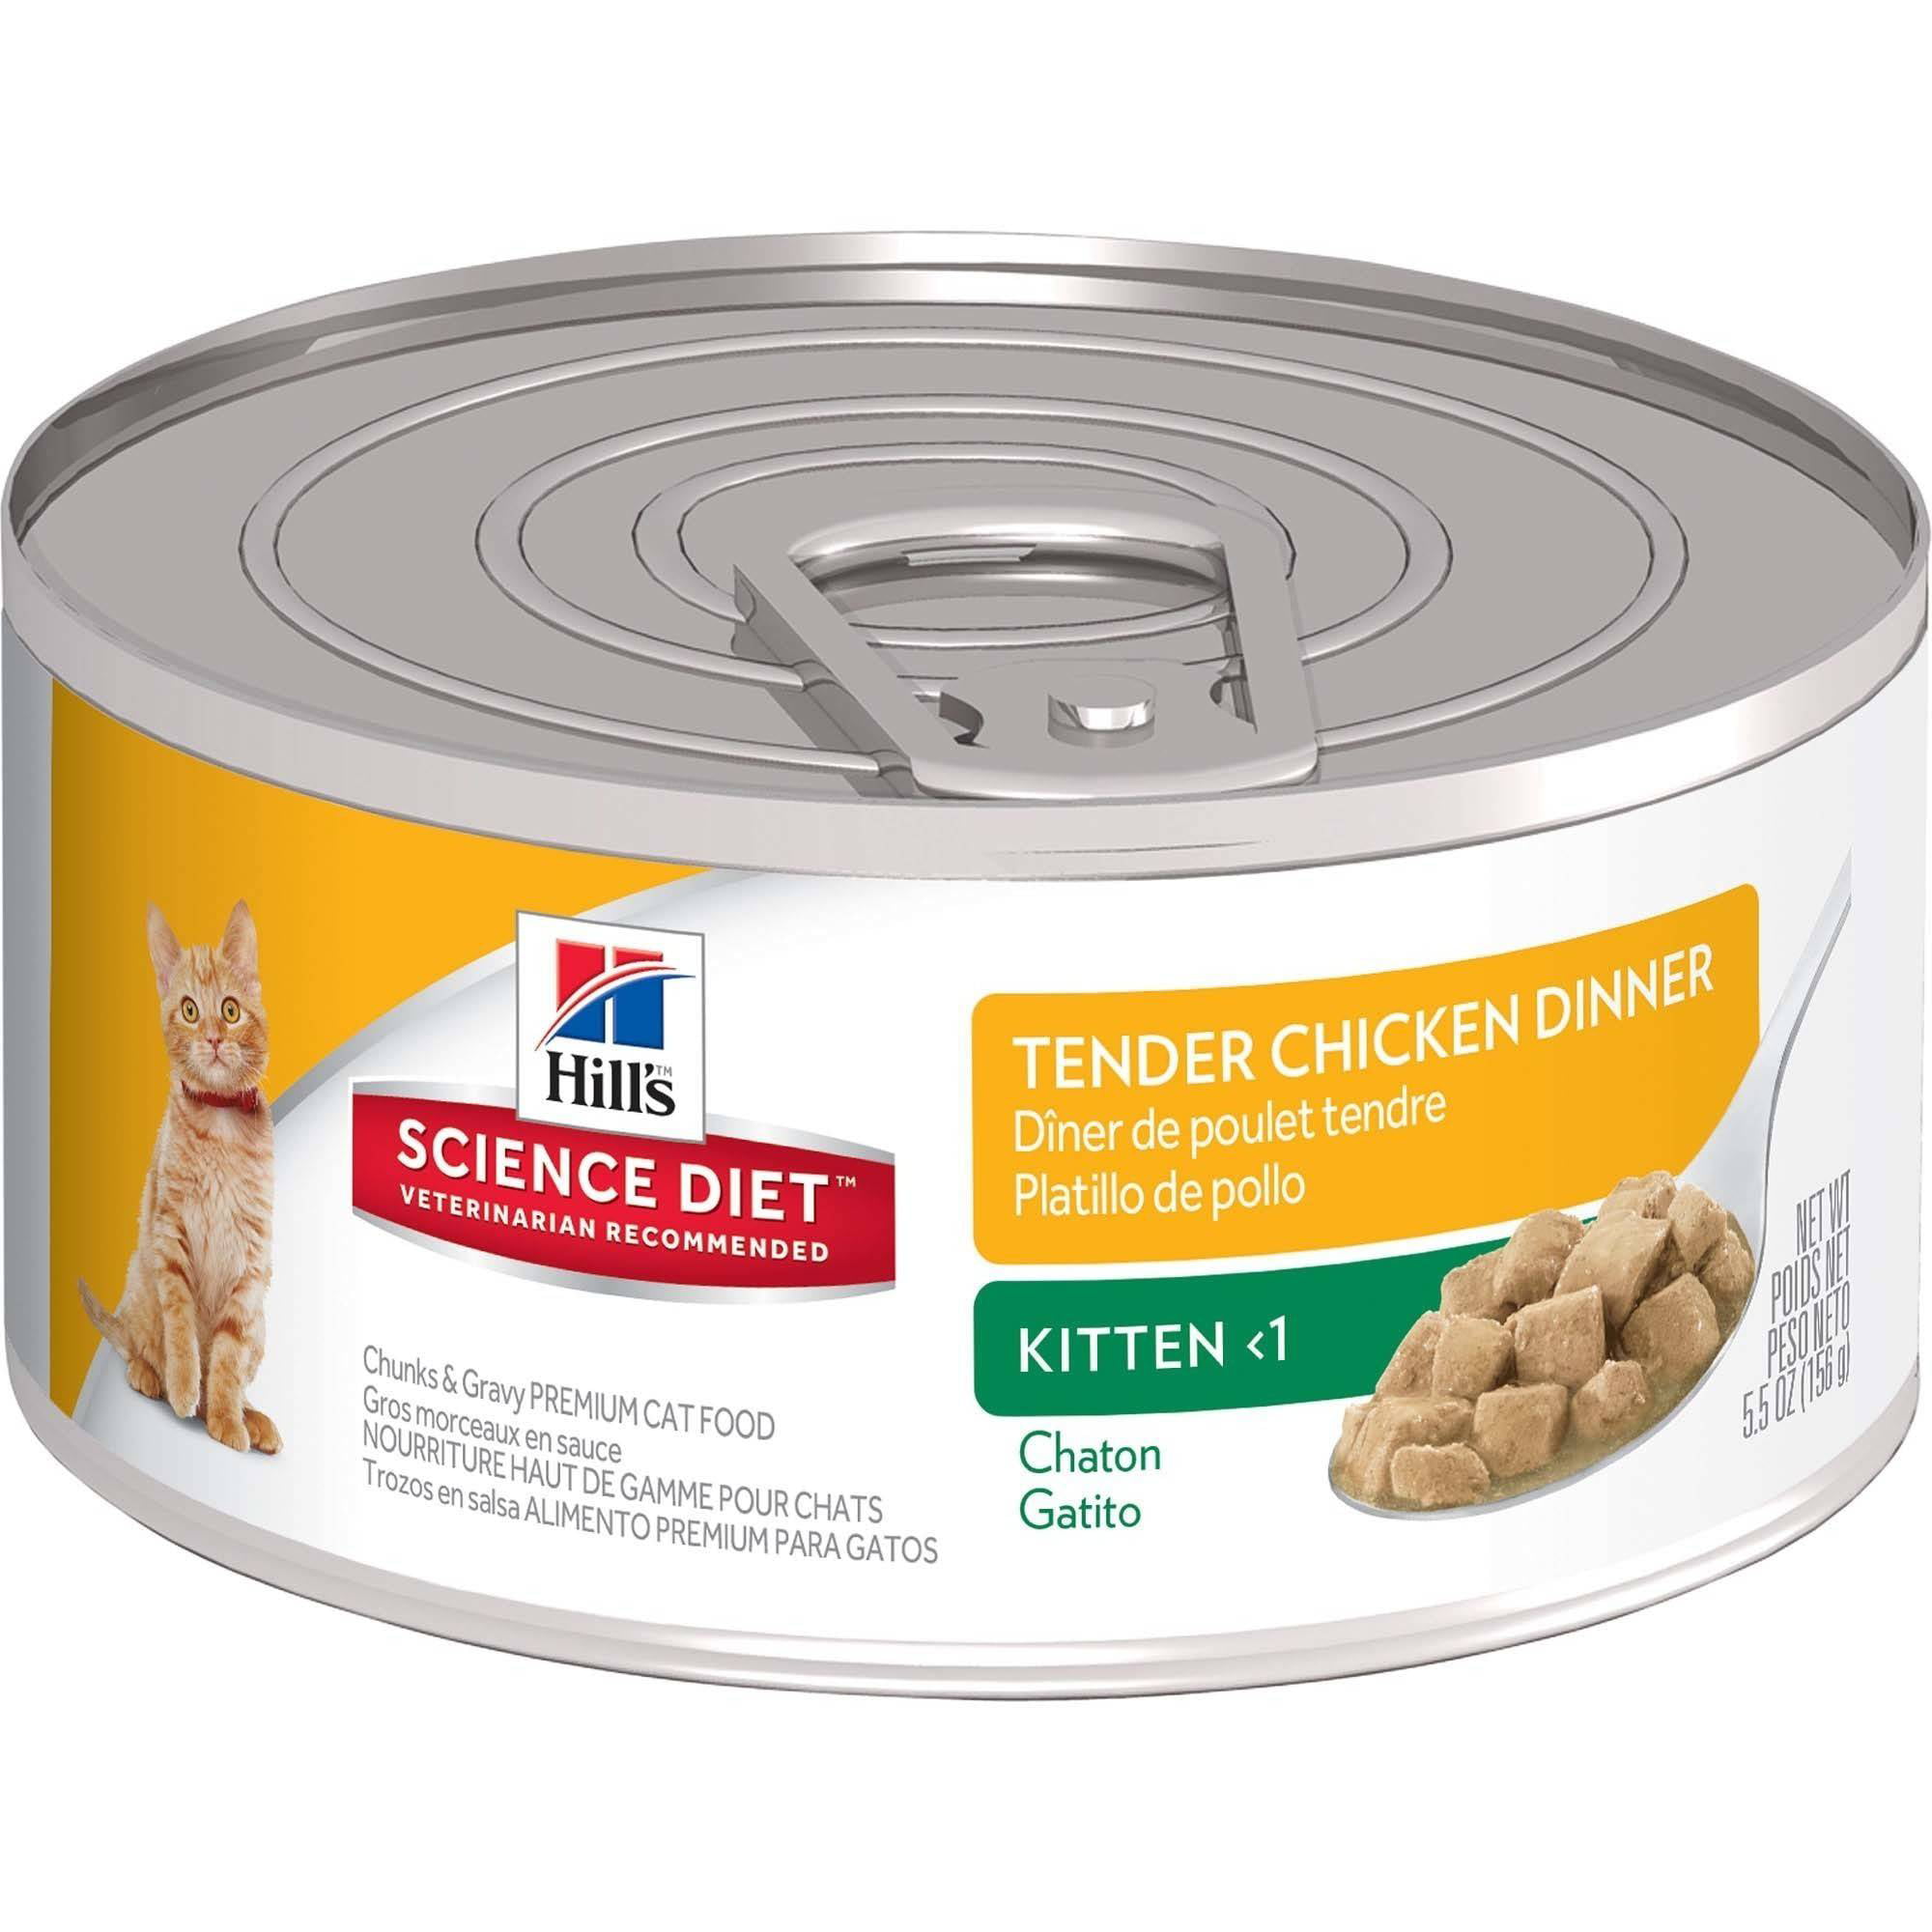 science diet kitten wet food